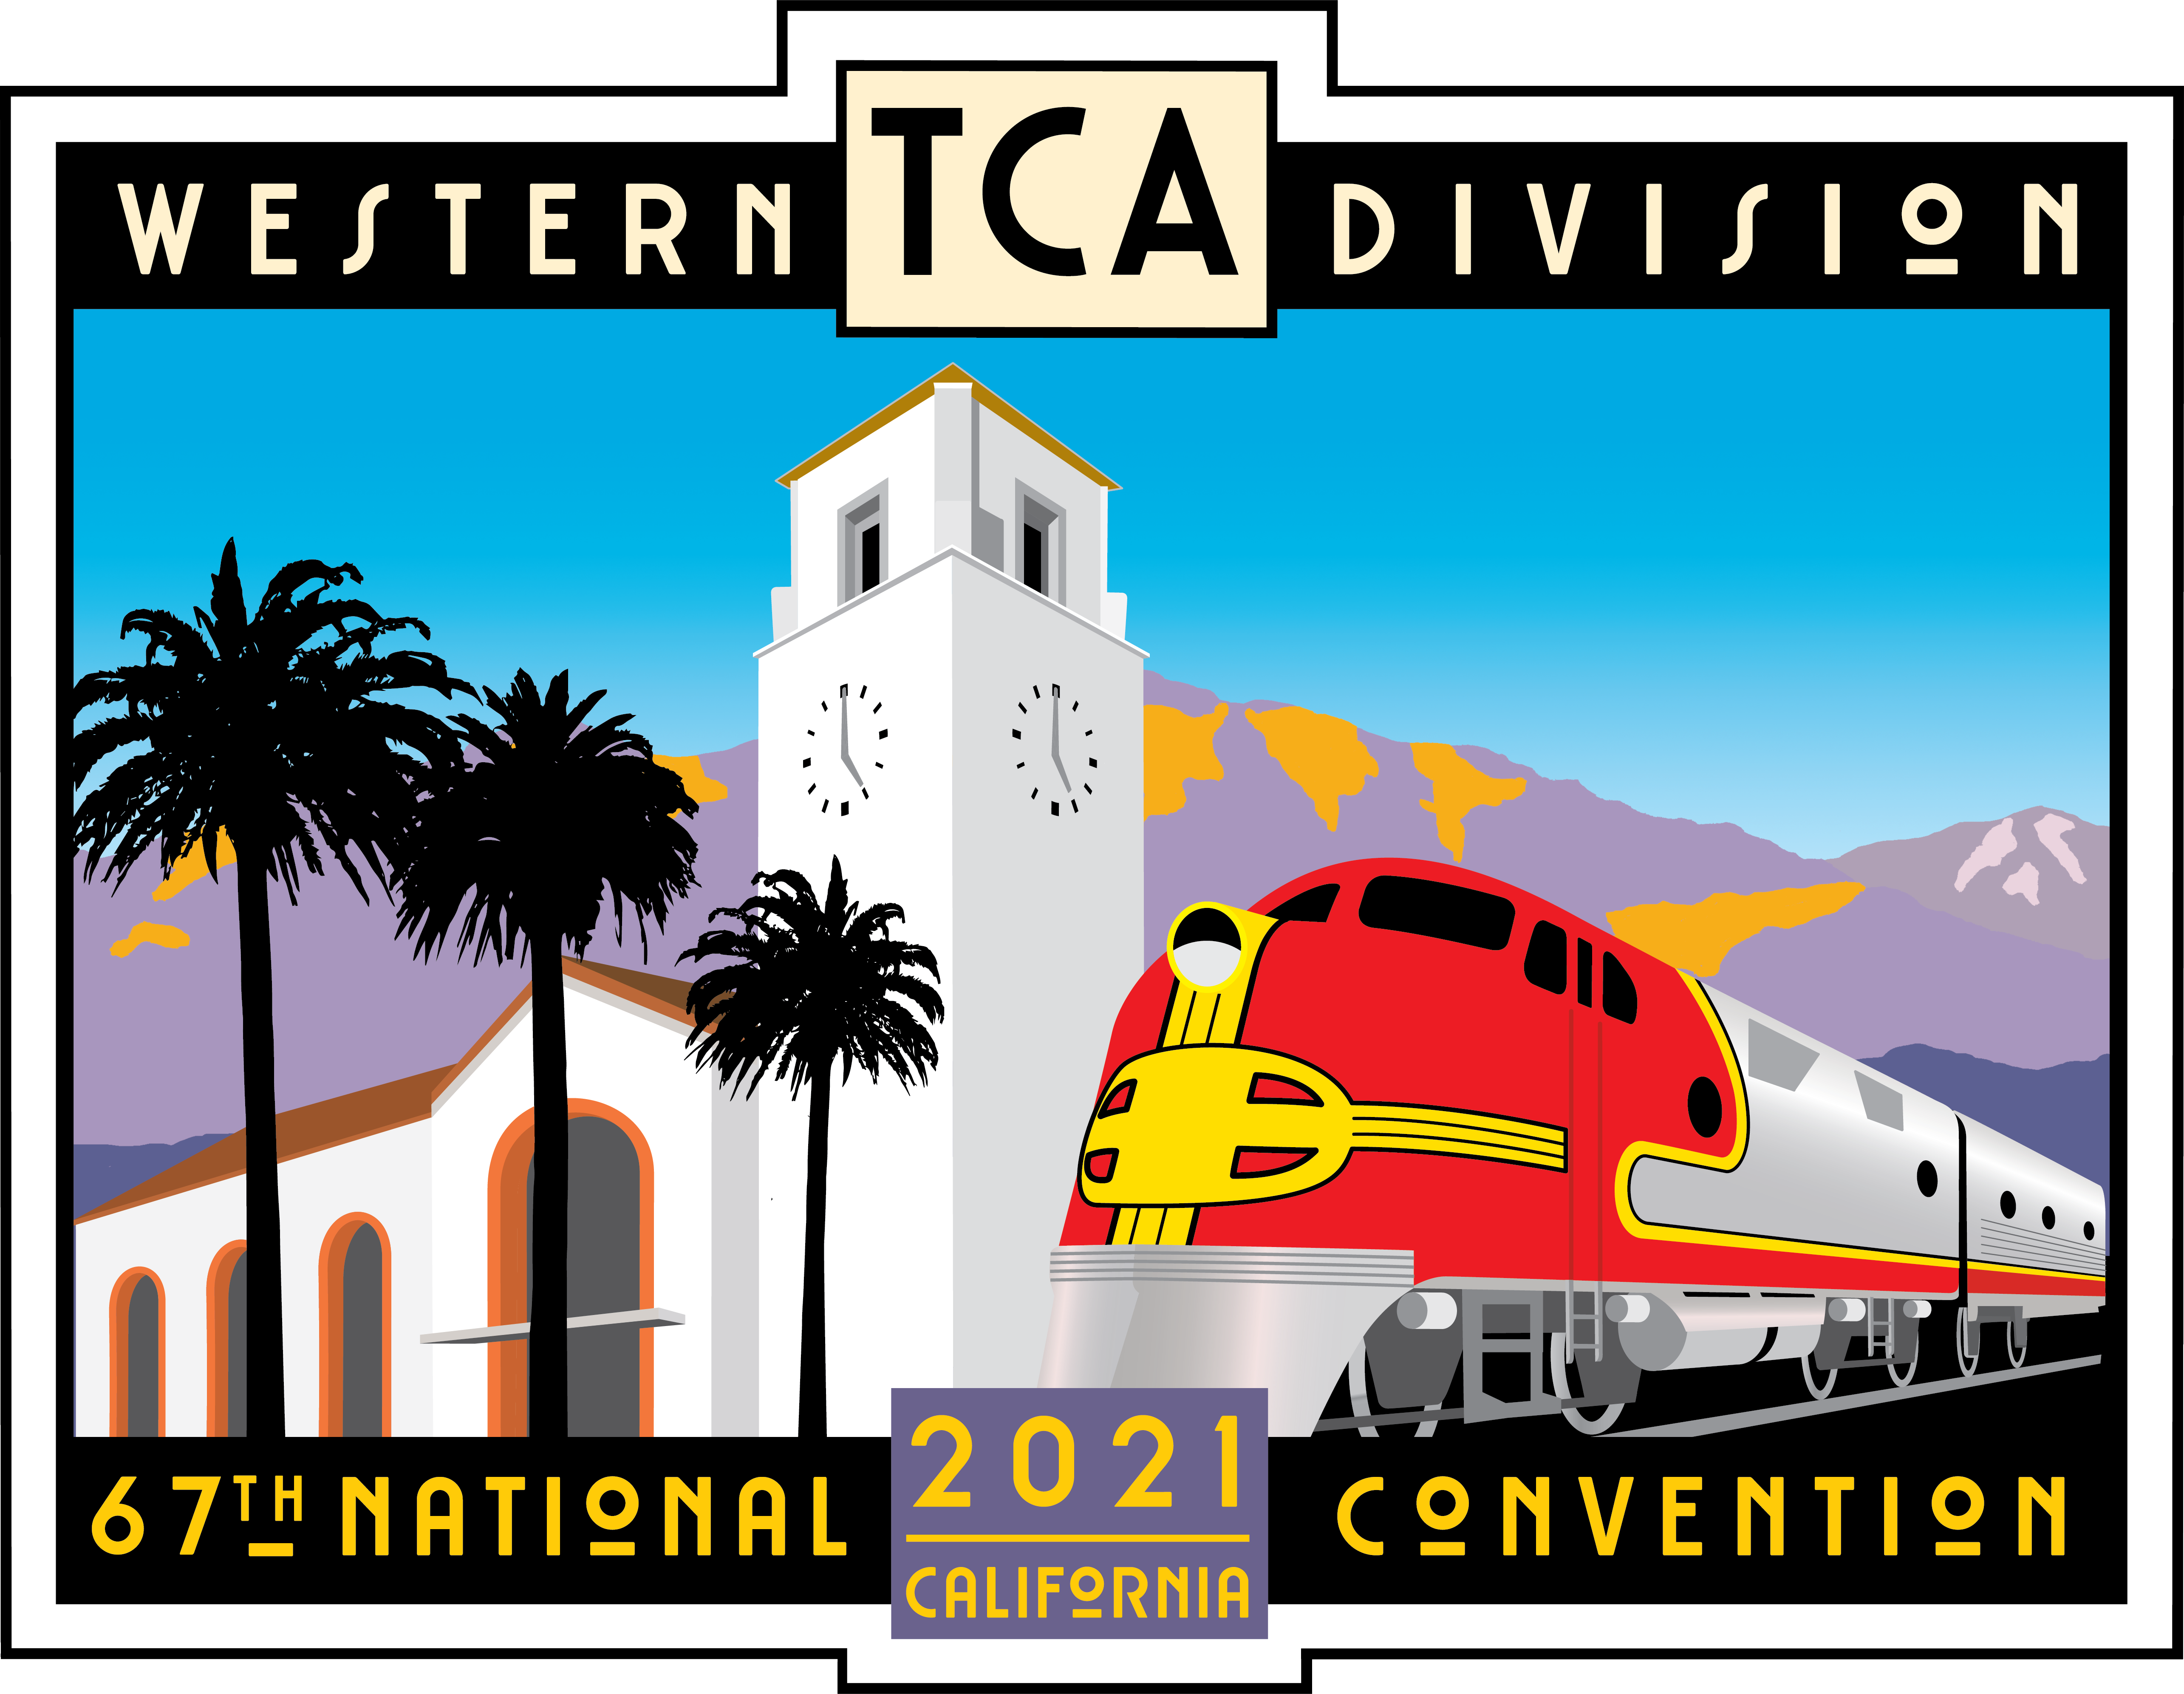 Convention Logo